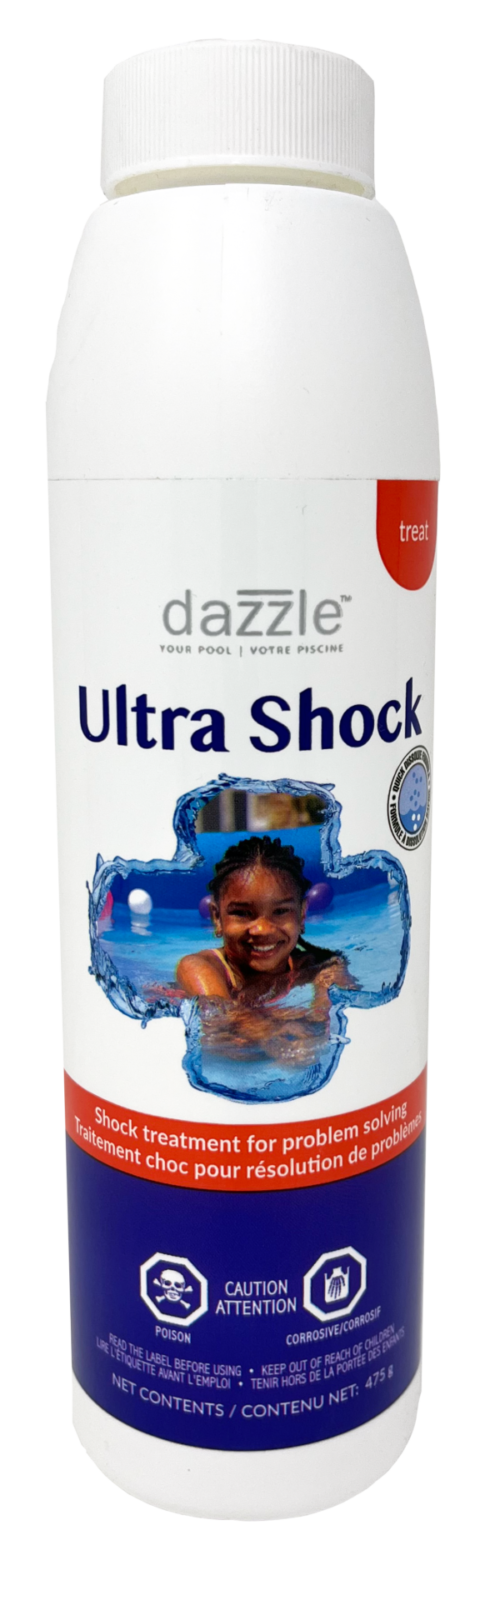 DAZ02500 Ultra Shock 475 g 500x1600 - ULTRA SHOCK 475g